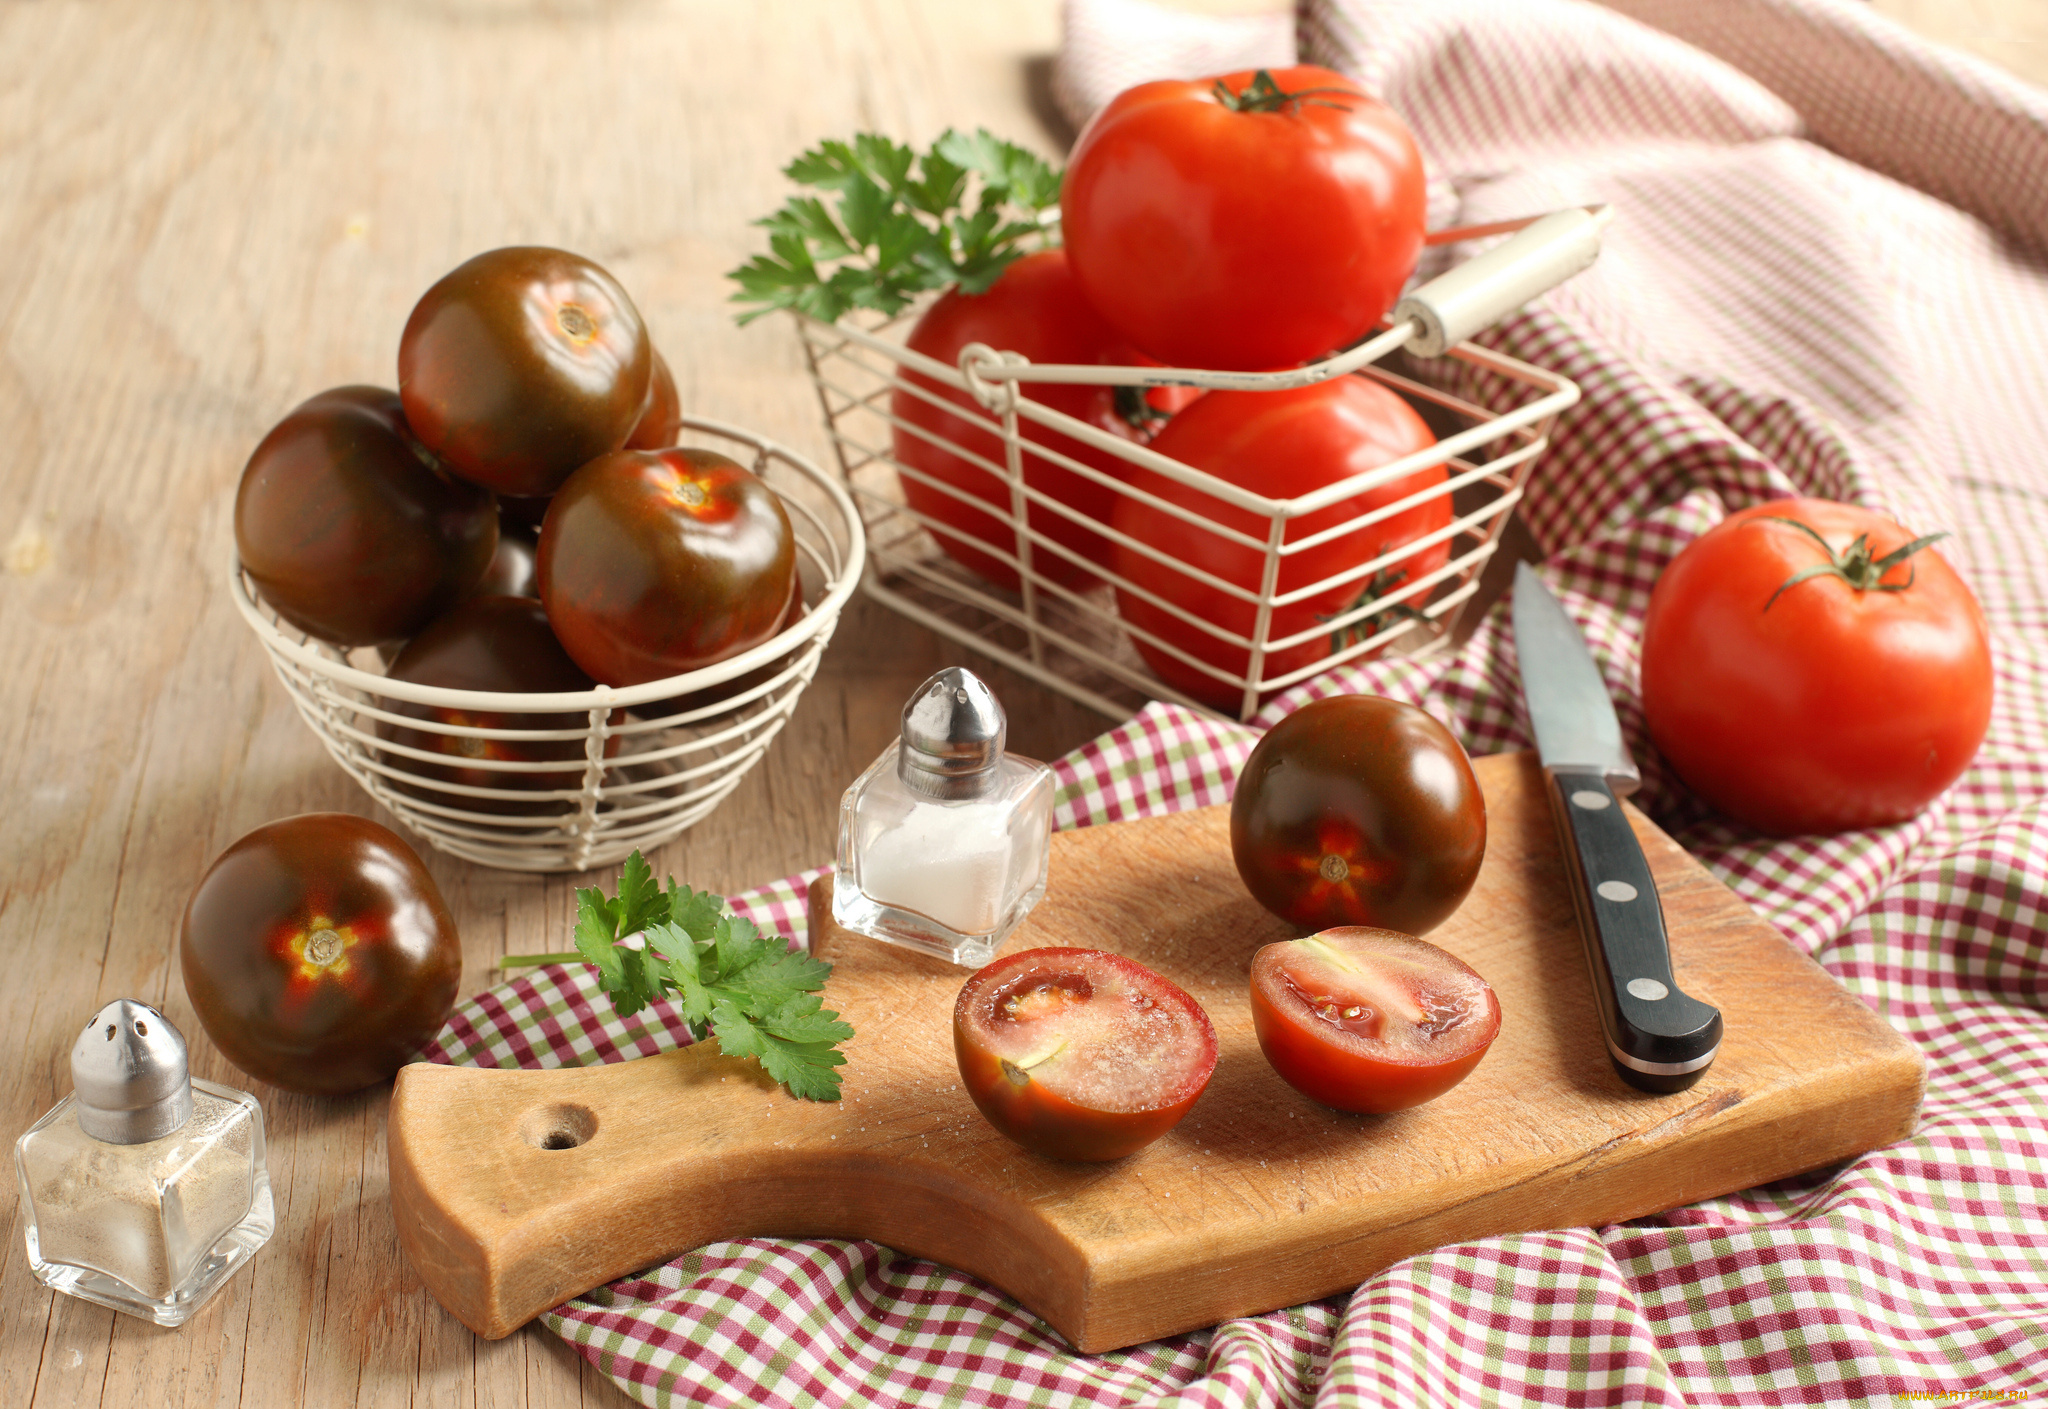 еда, помидоры, соль, нож, доска, салфетка, зелень, томаты